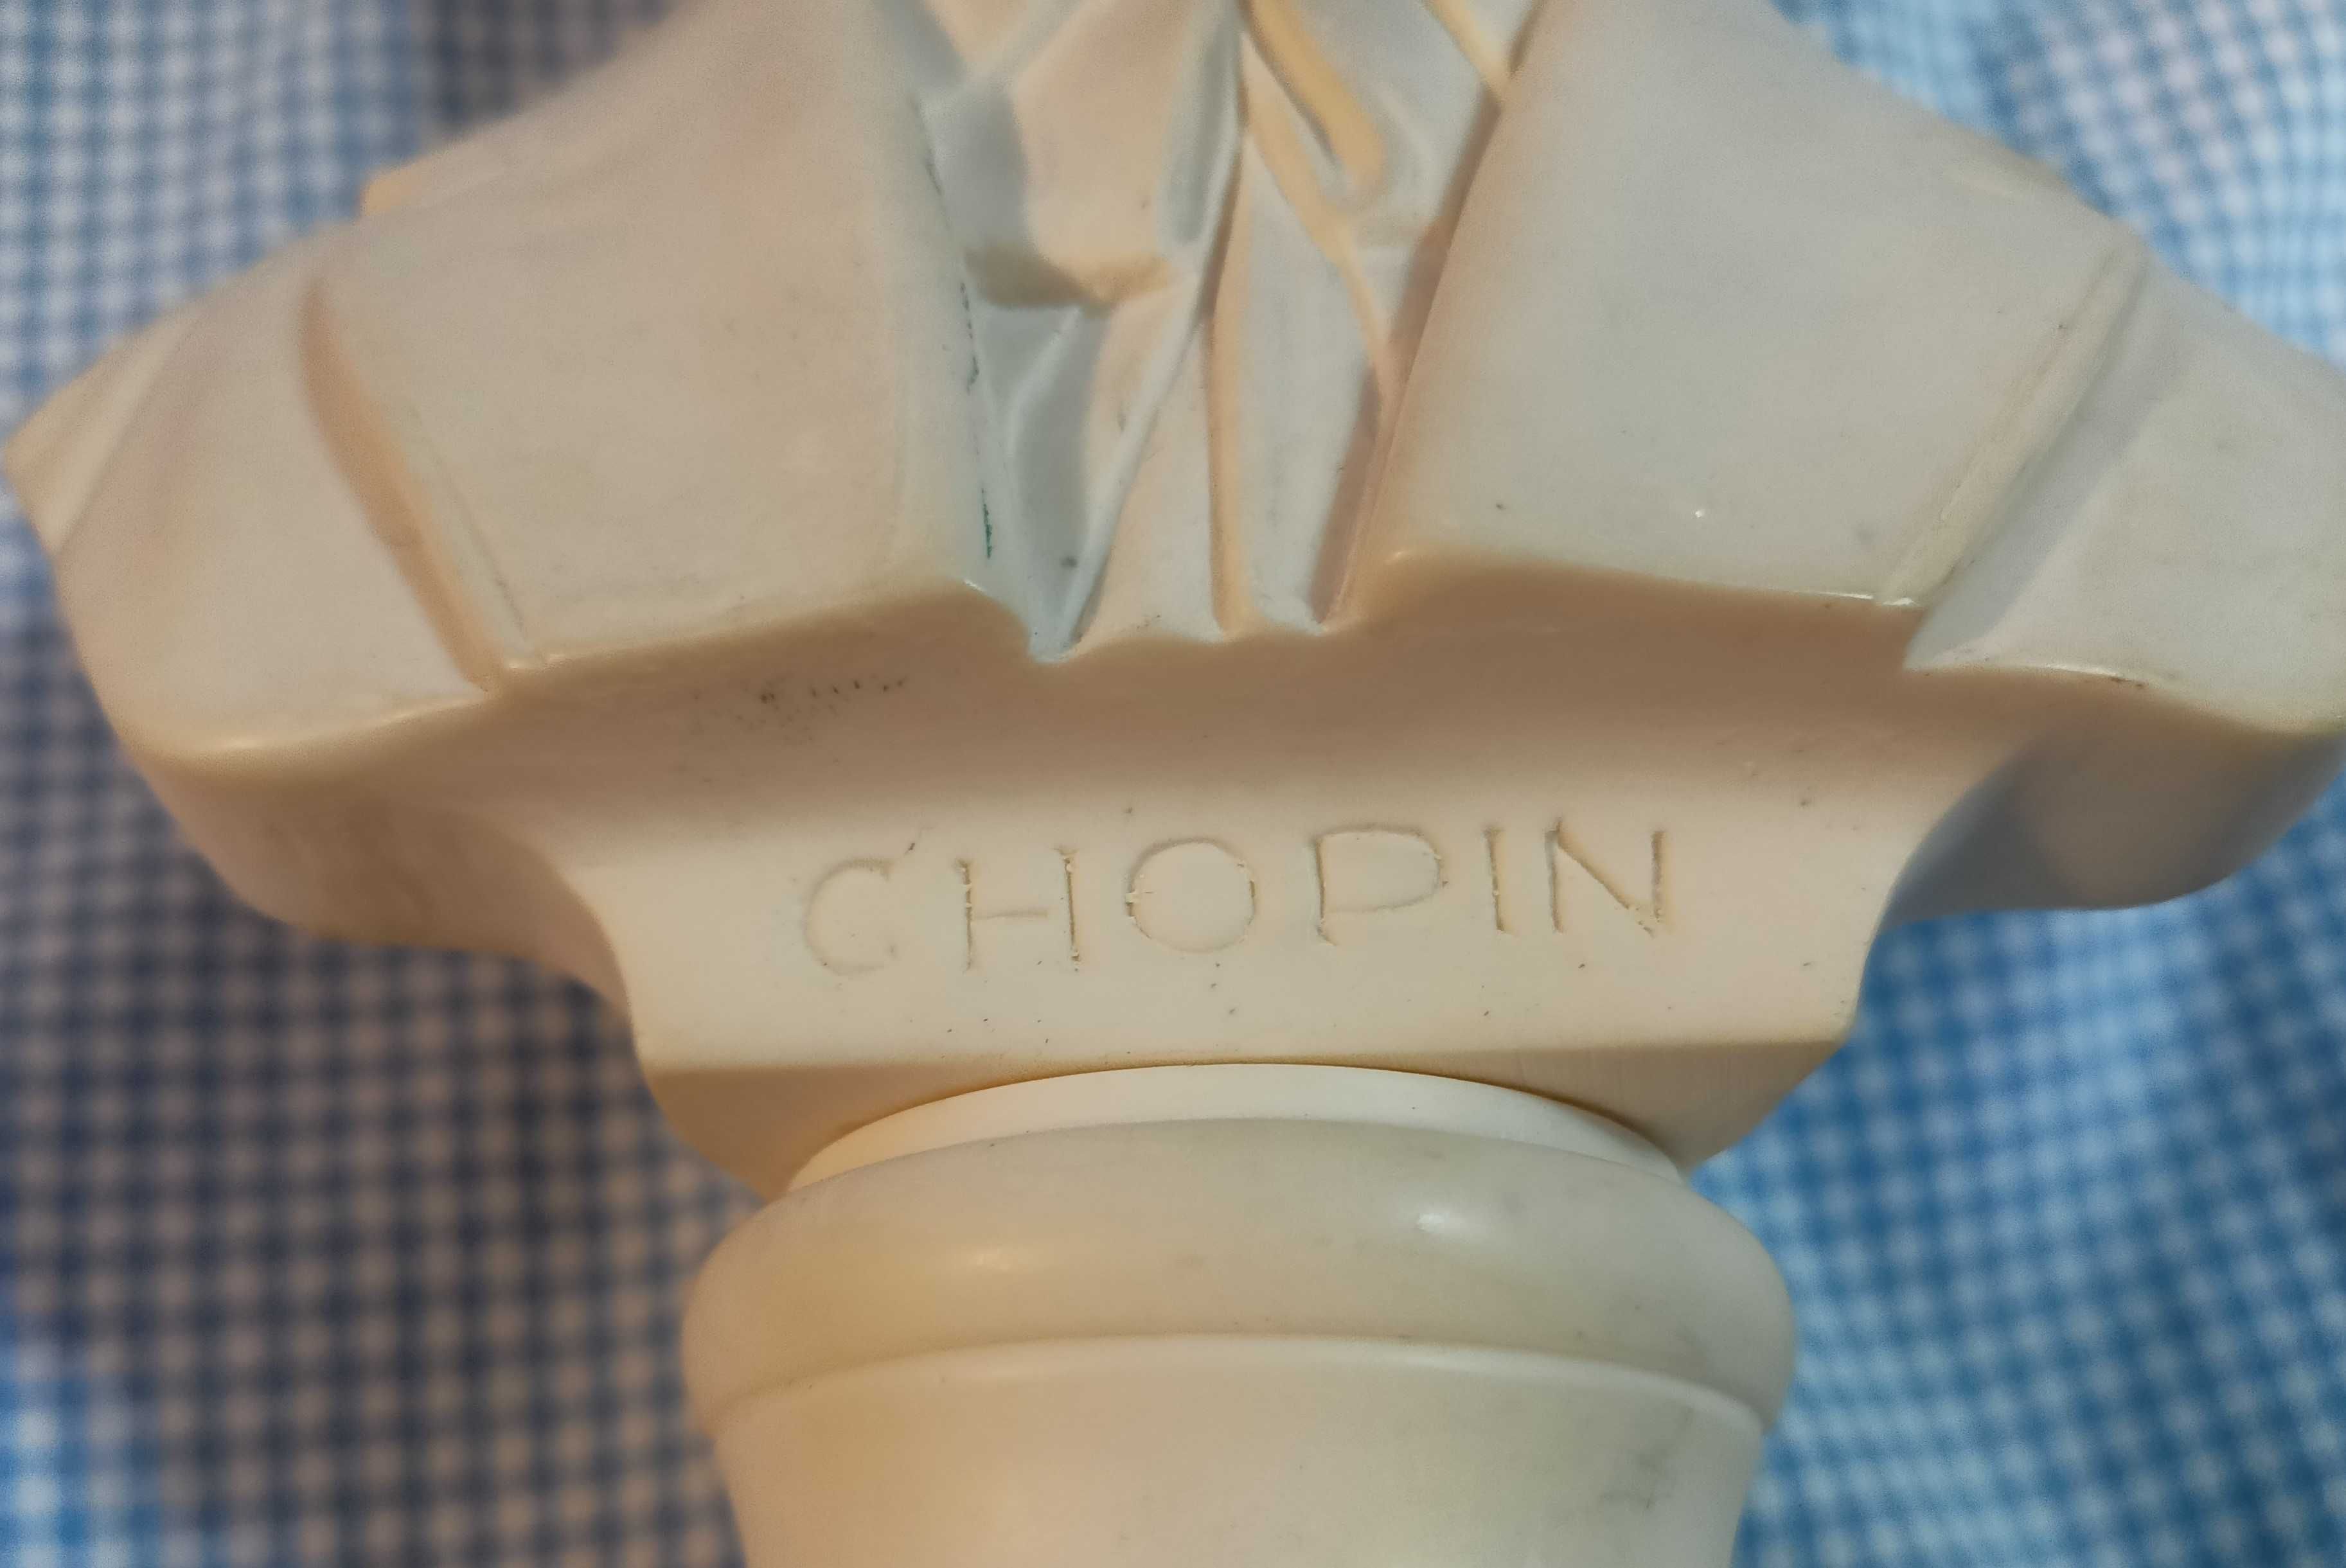 Busto Marfinite Chopin